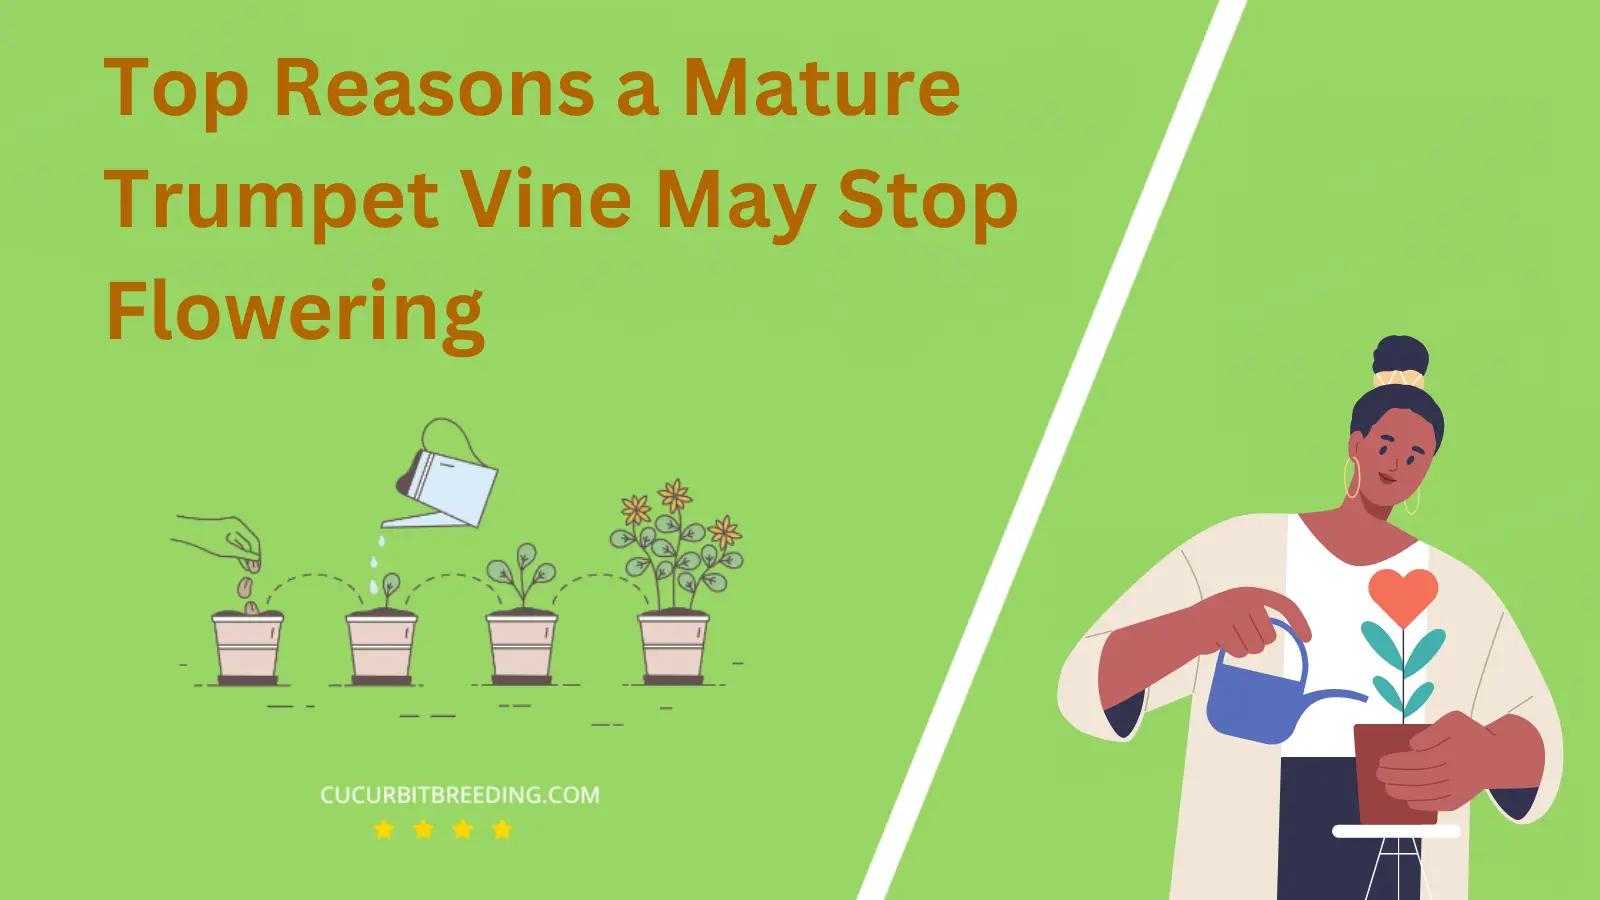 Top Reasons a Mature Trumpet Vine May Stop Flowering